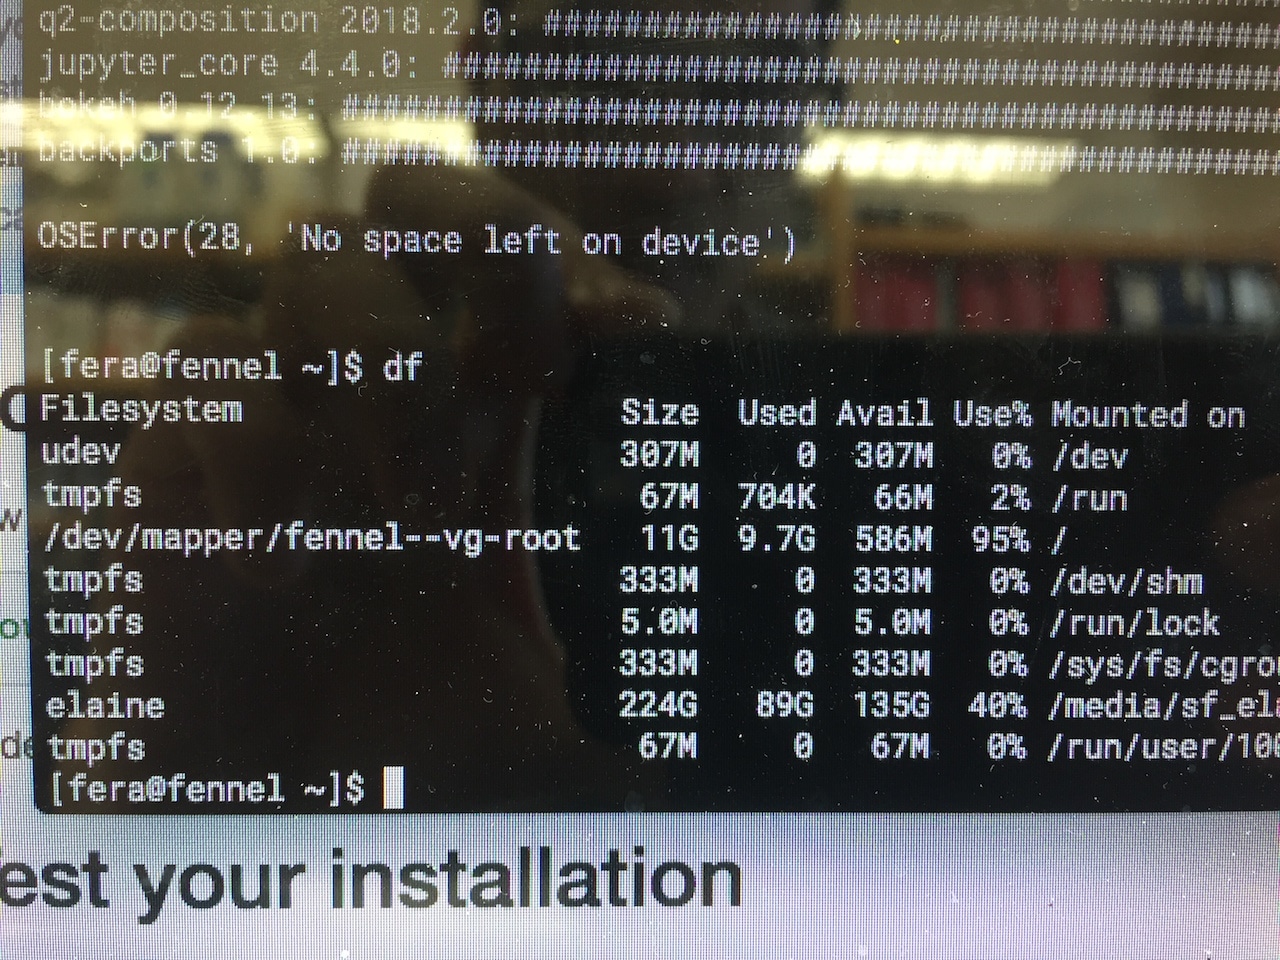 OS error: insufficient disk space